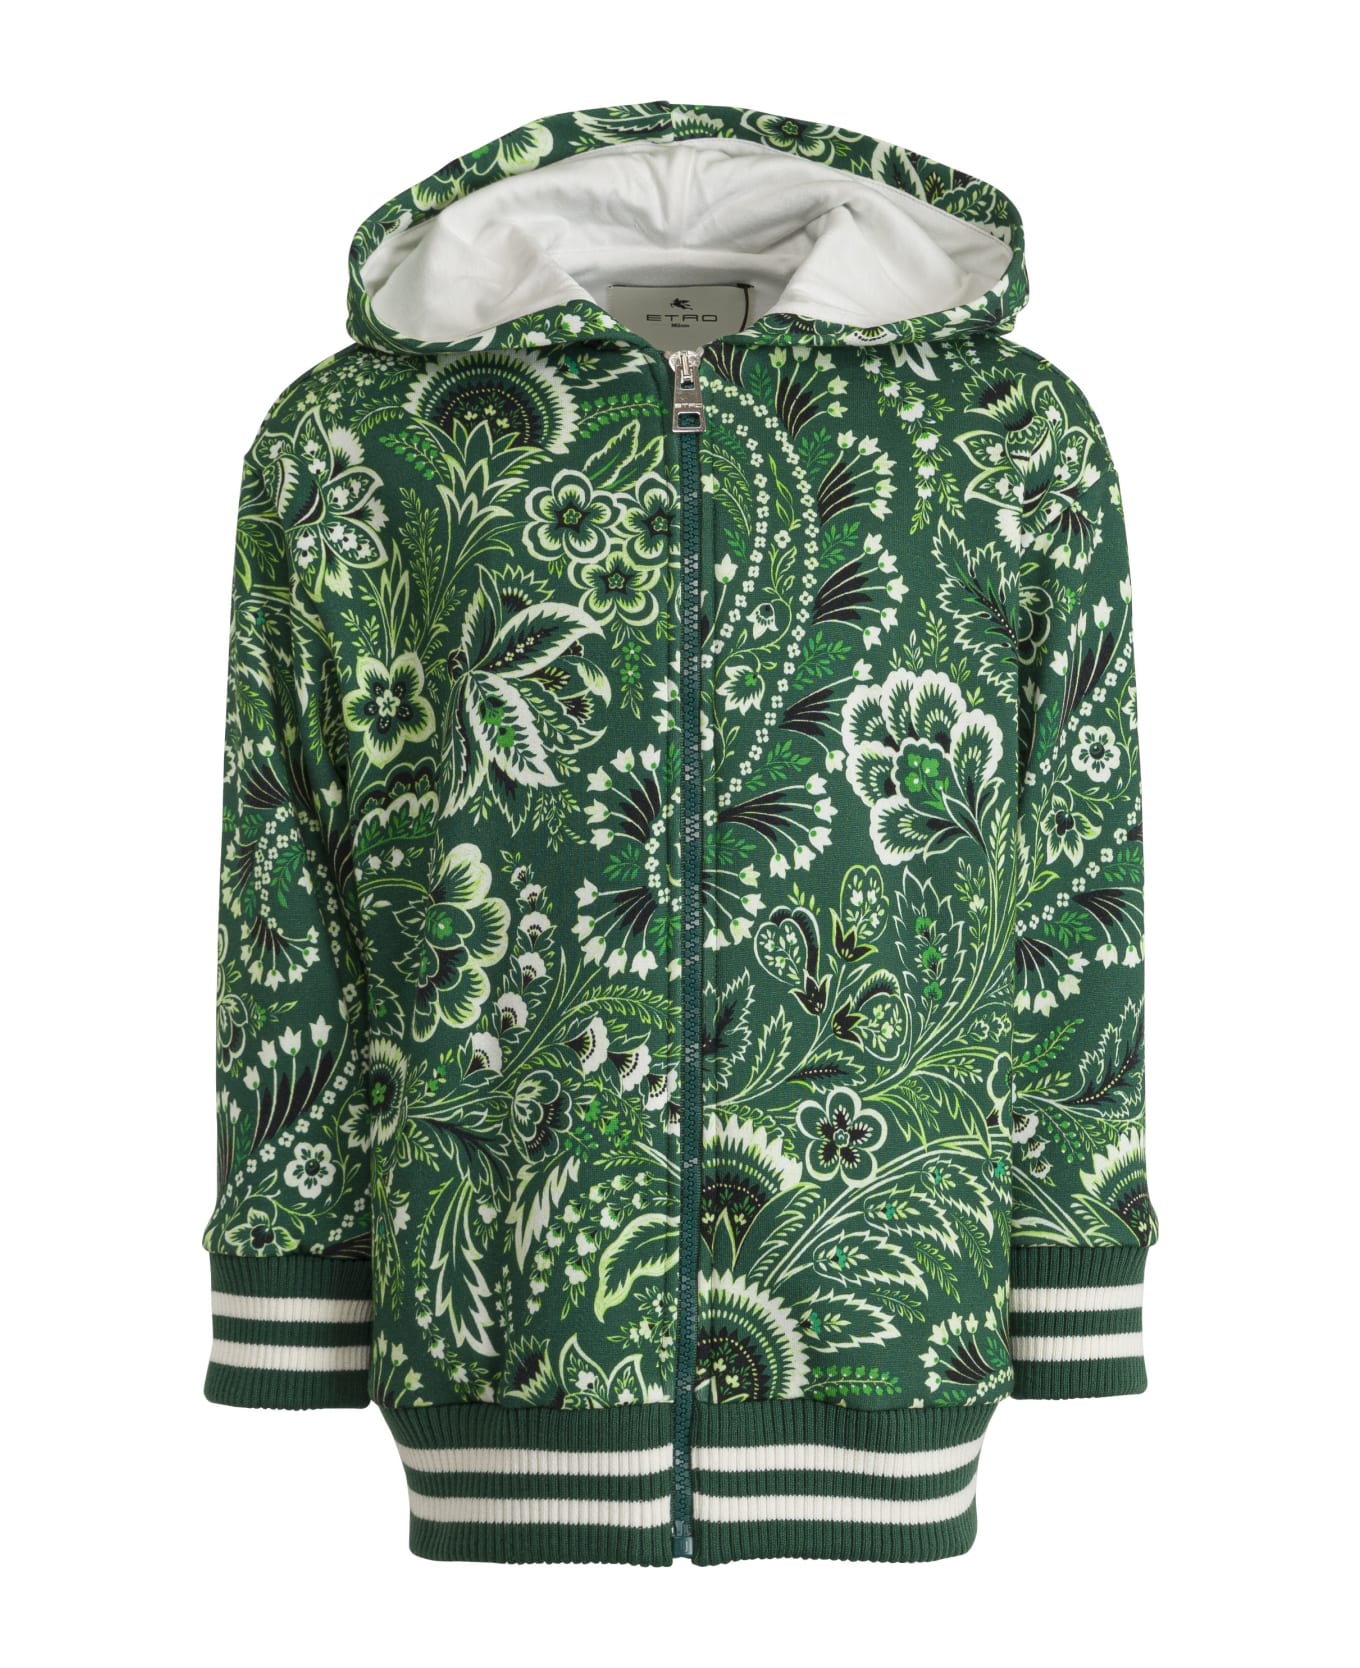 Etro Floral Sweatshirt - green/ivory